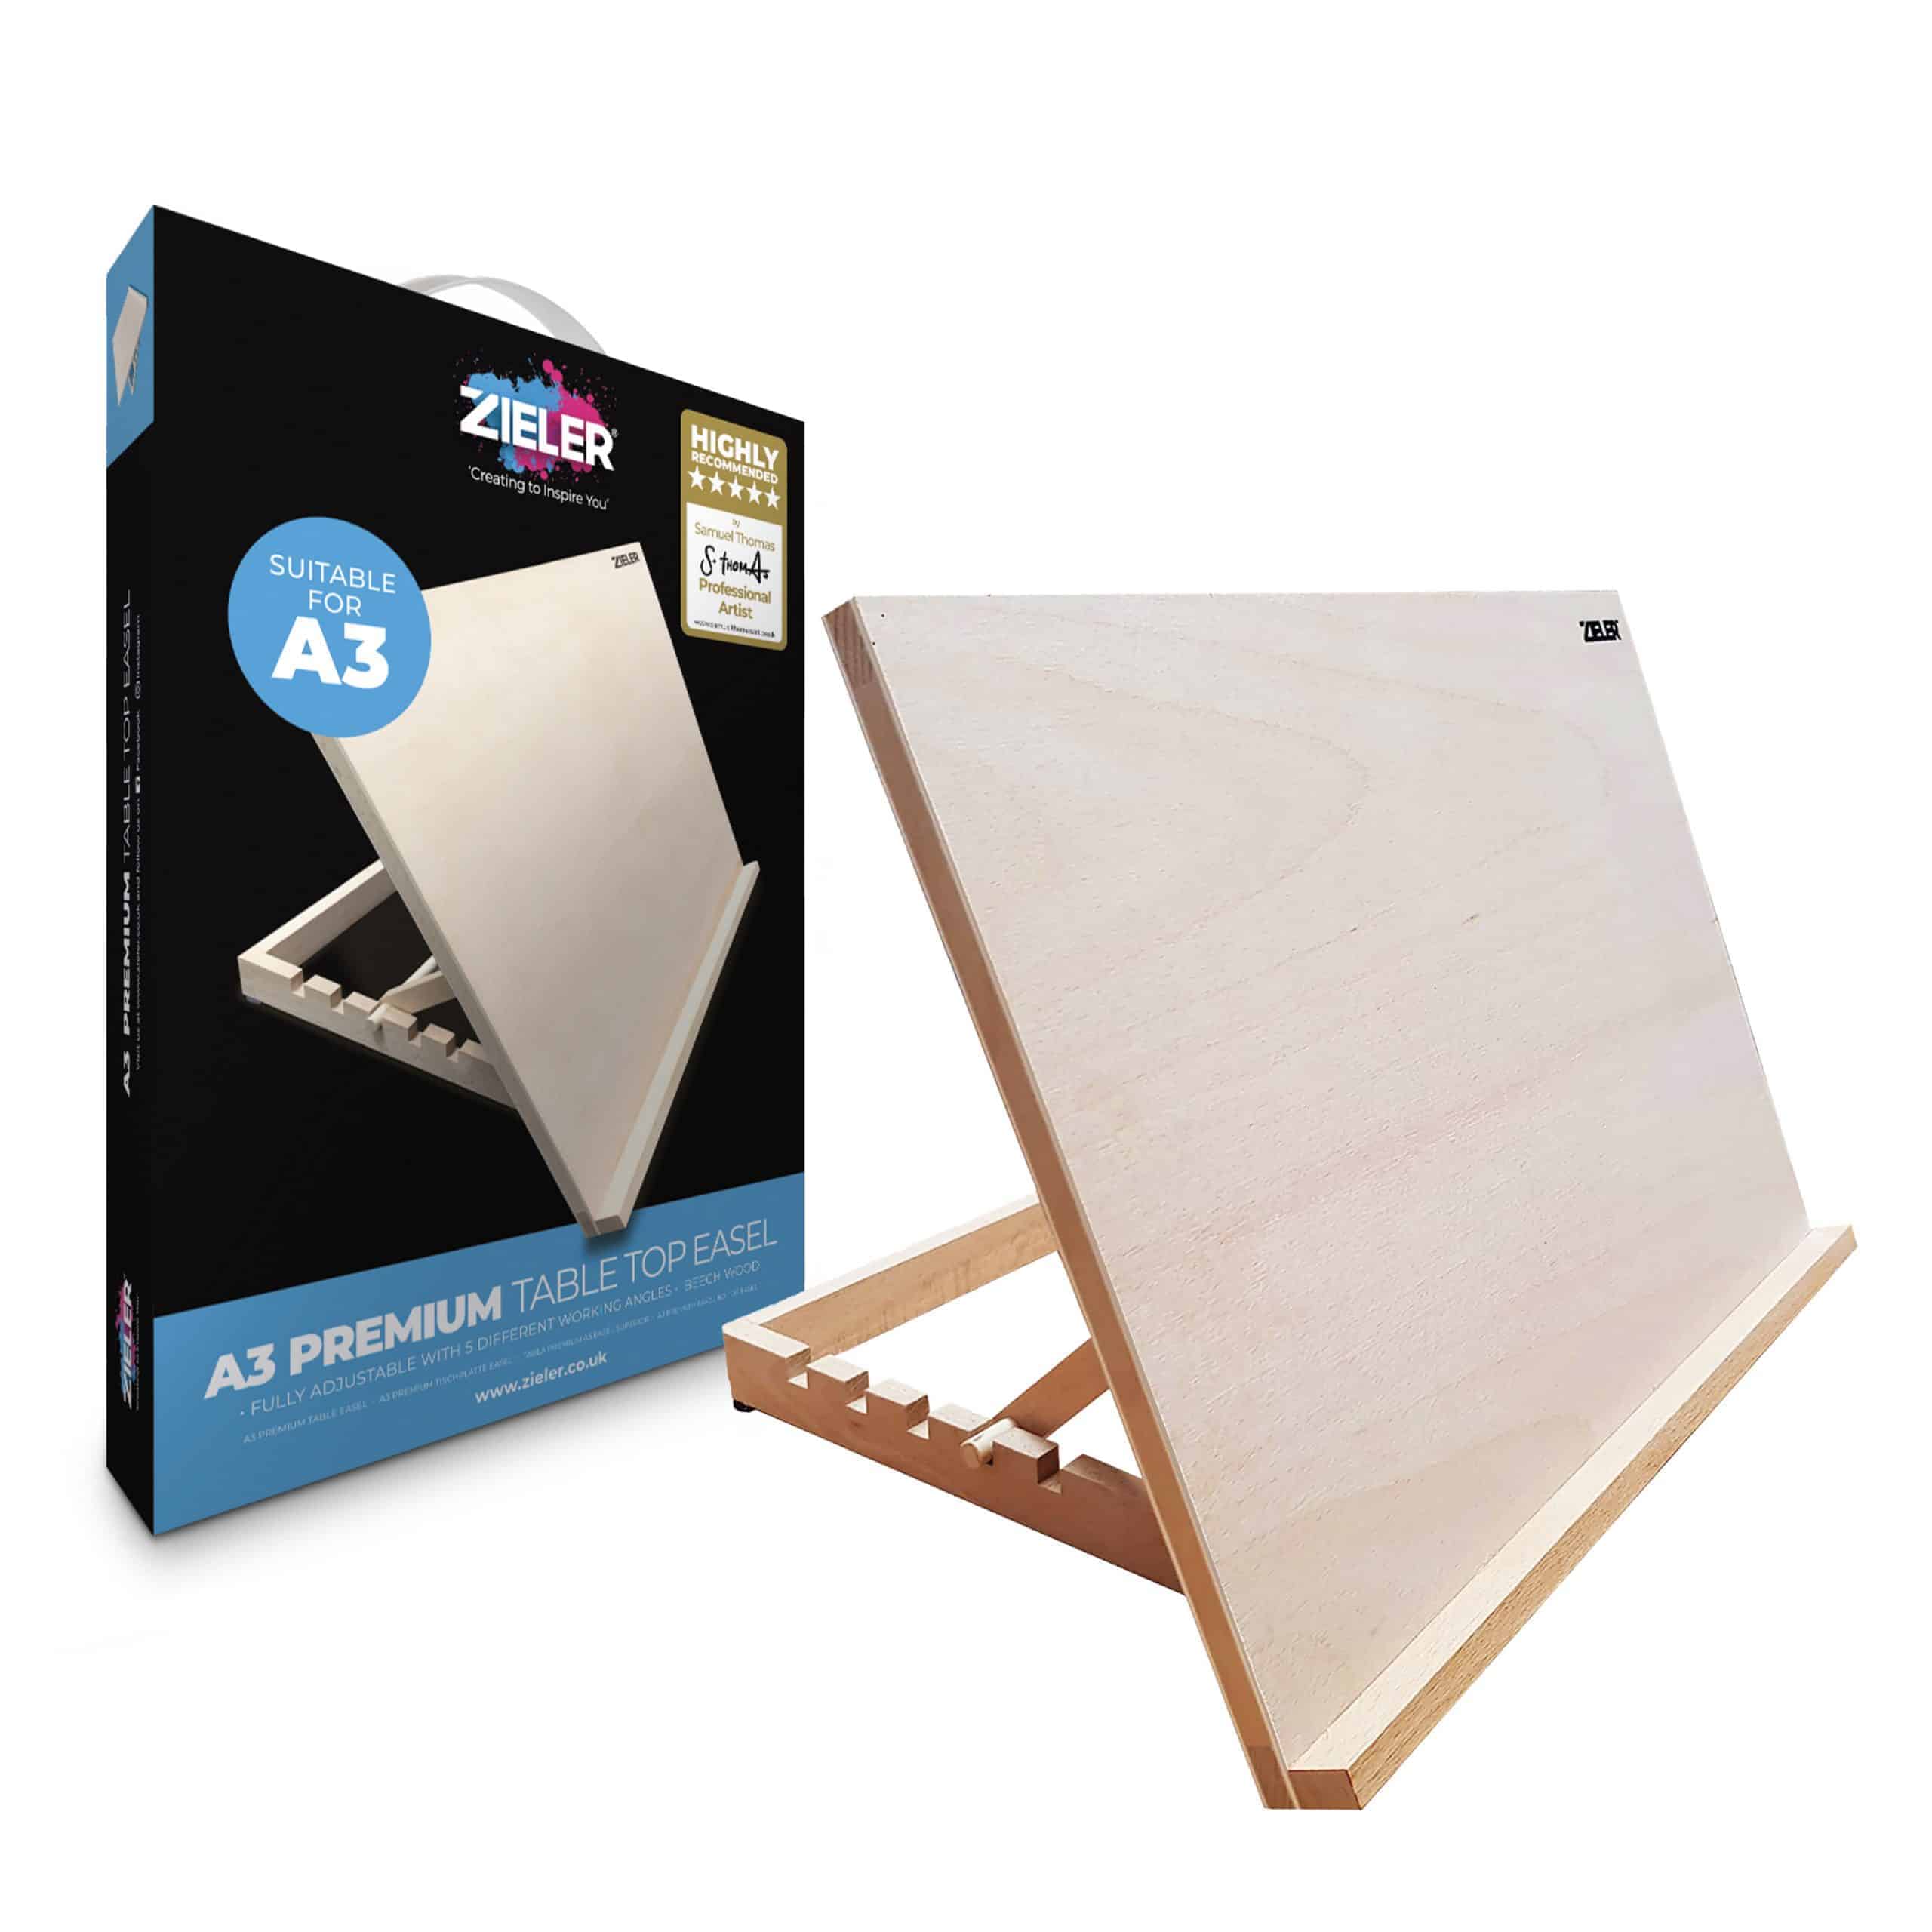 Adjustable Wooden Desk/Table Premium Professional A3 Art & Craft Work Station 